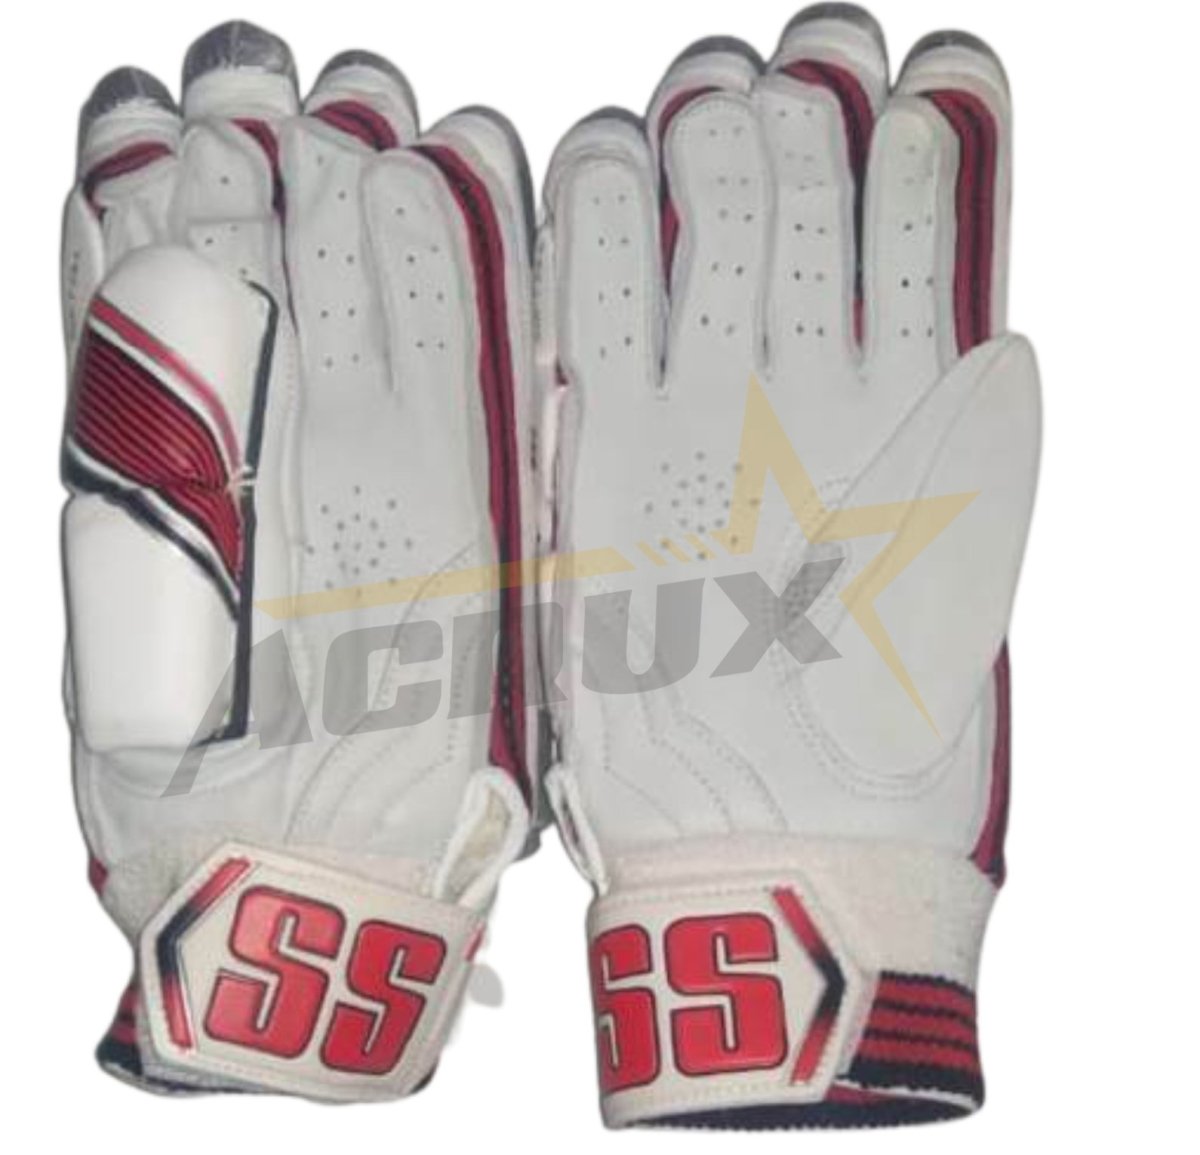 SS Super Test Cricket Batting Gloves